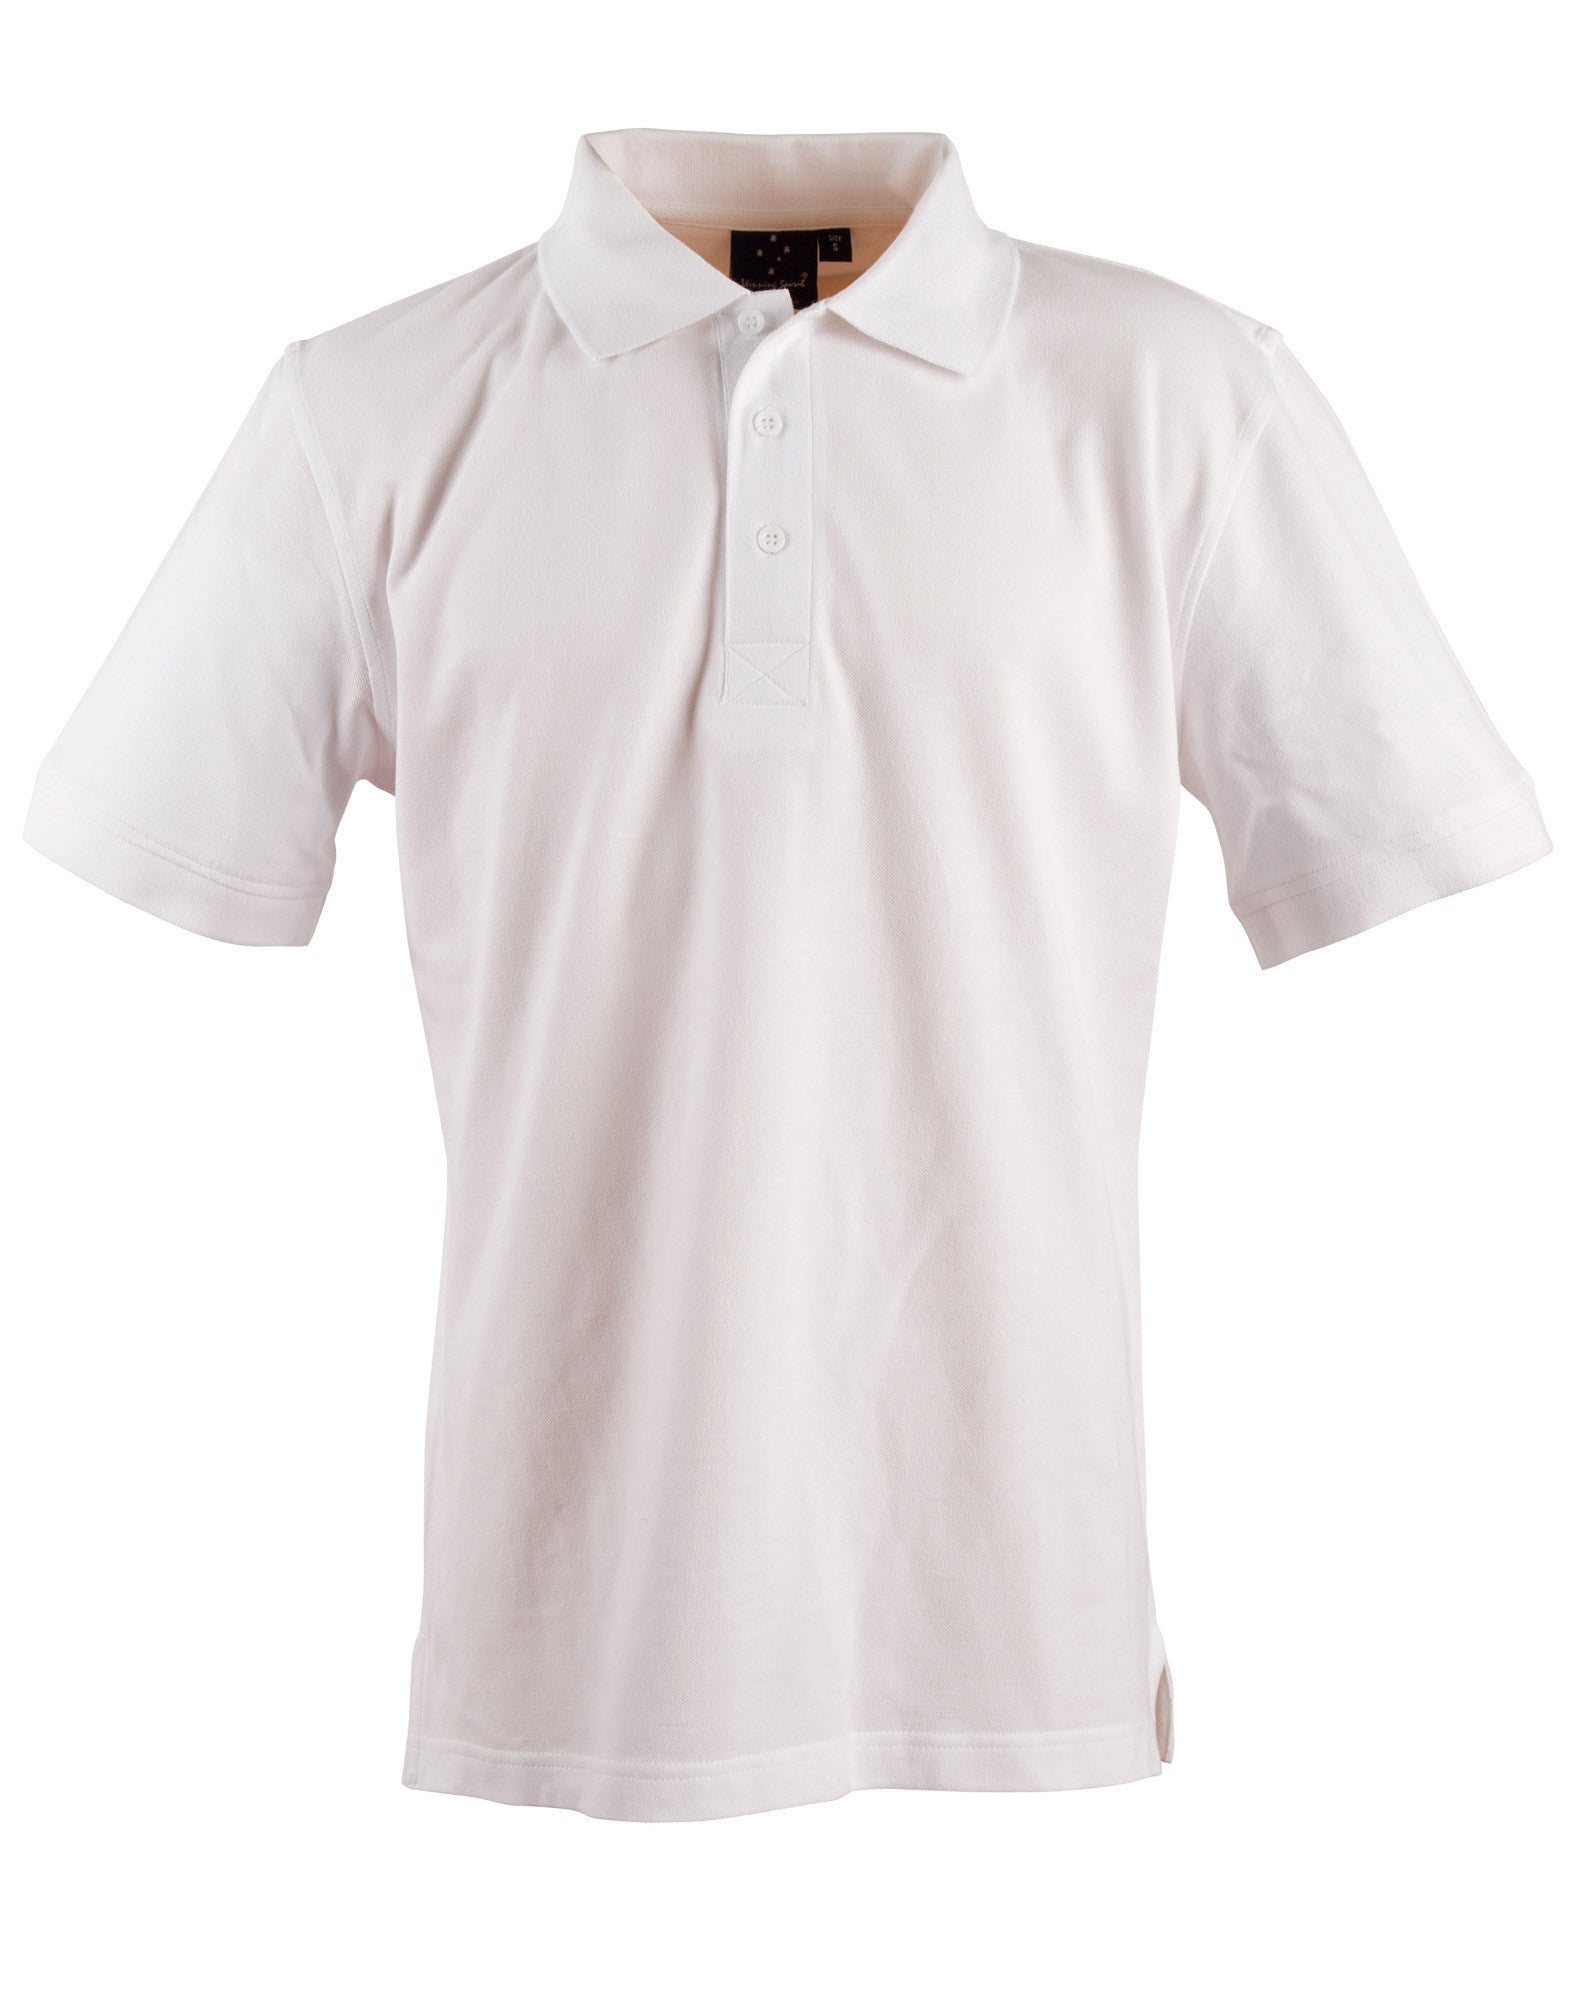 Winning Spirit Men's Short Sleeve 100% Cotton Pique Polo-(PS39)